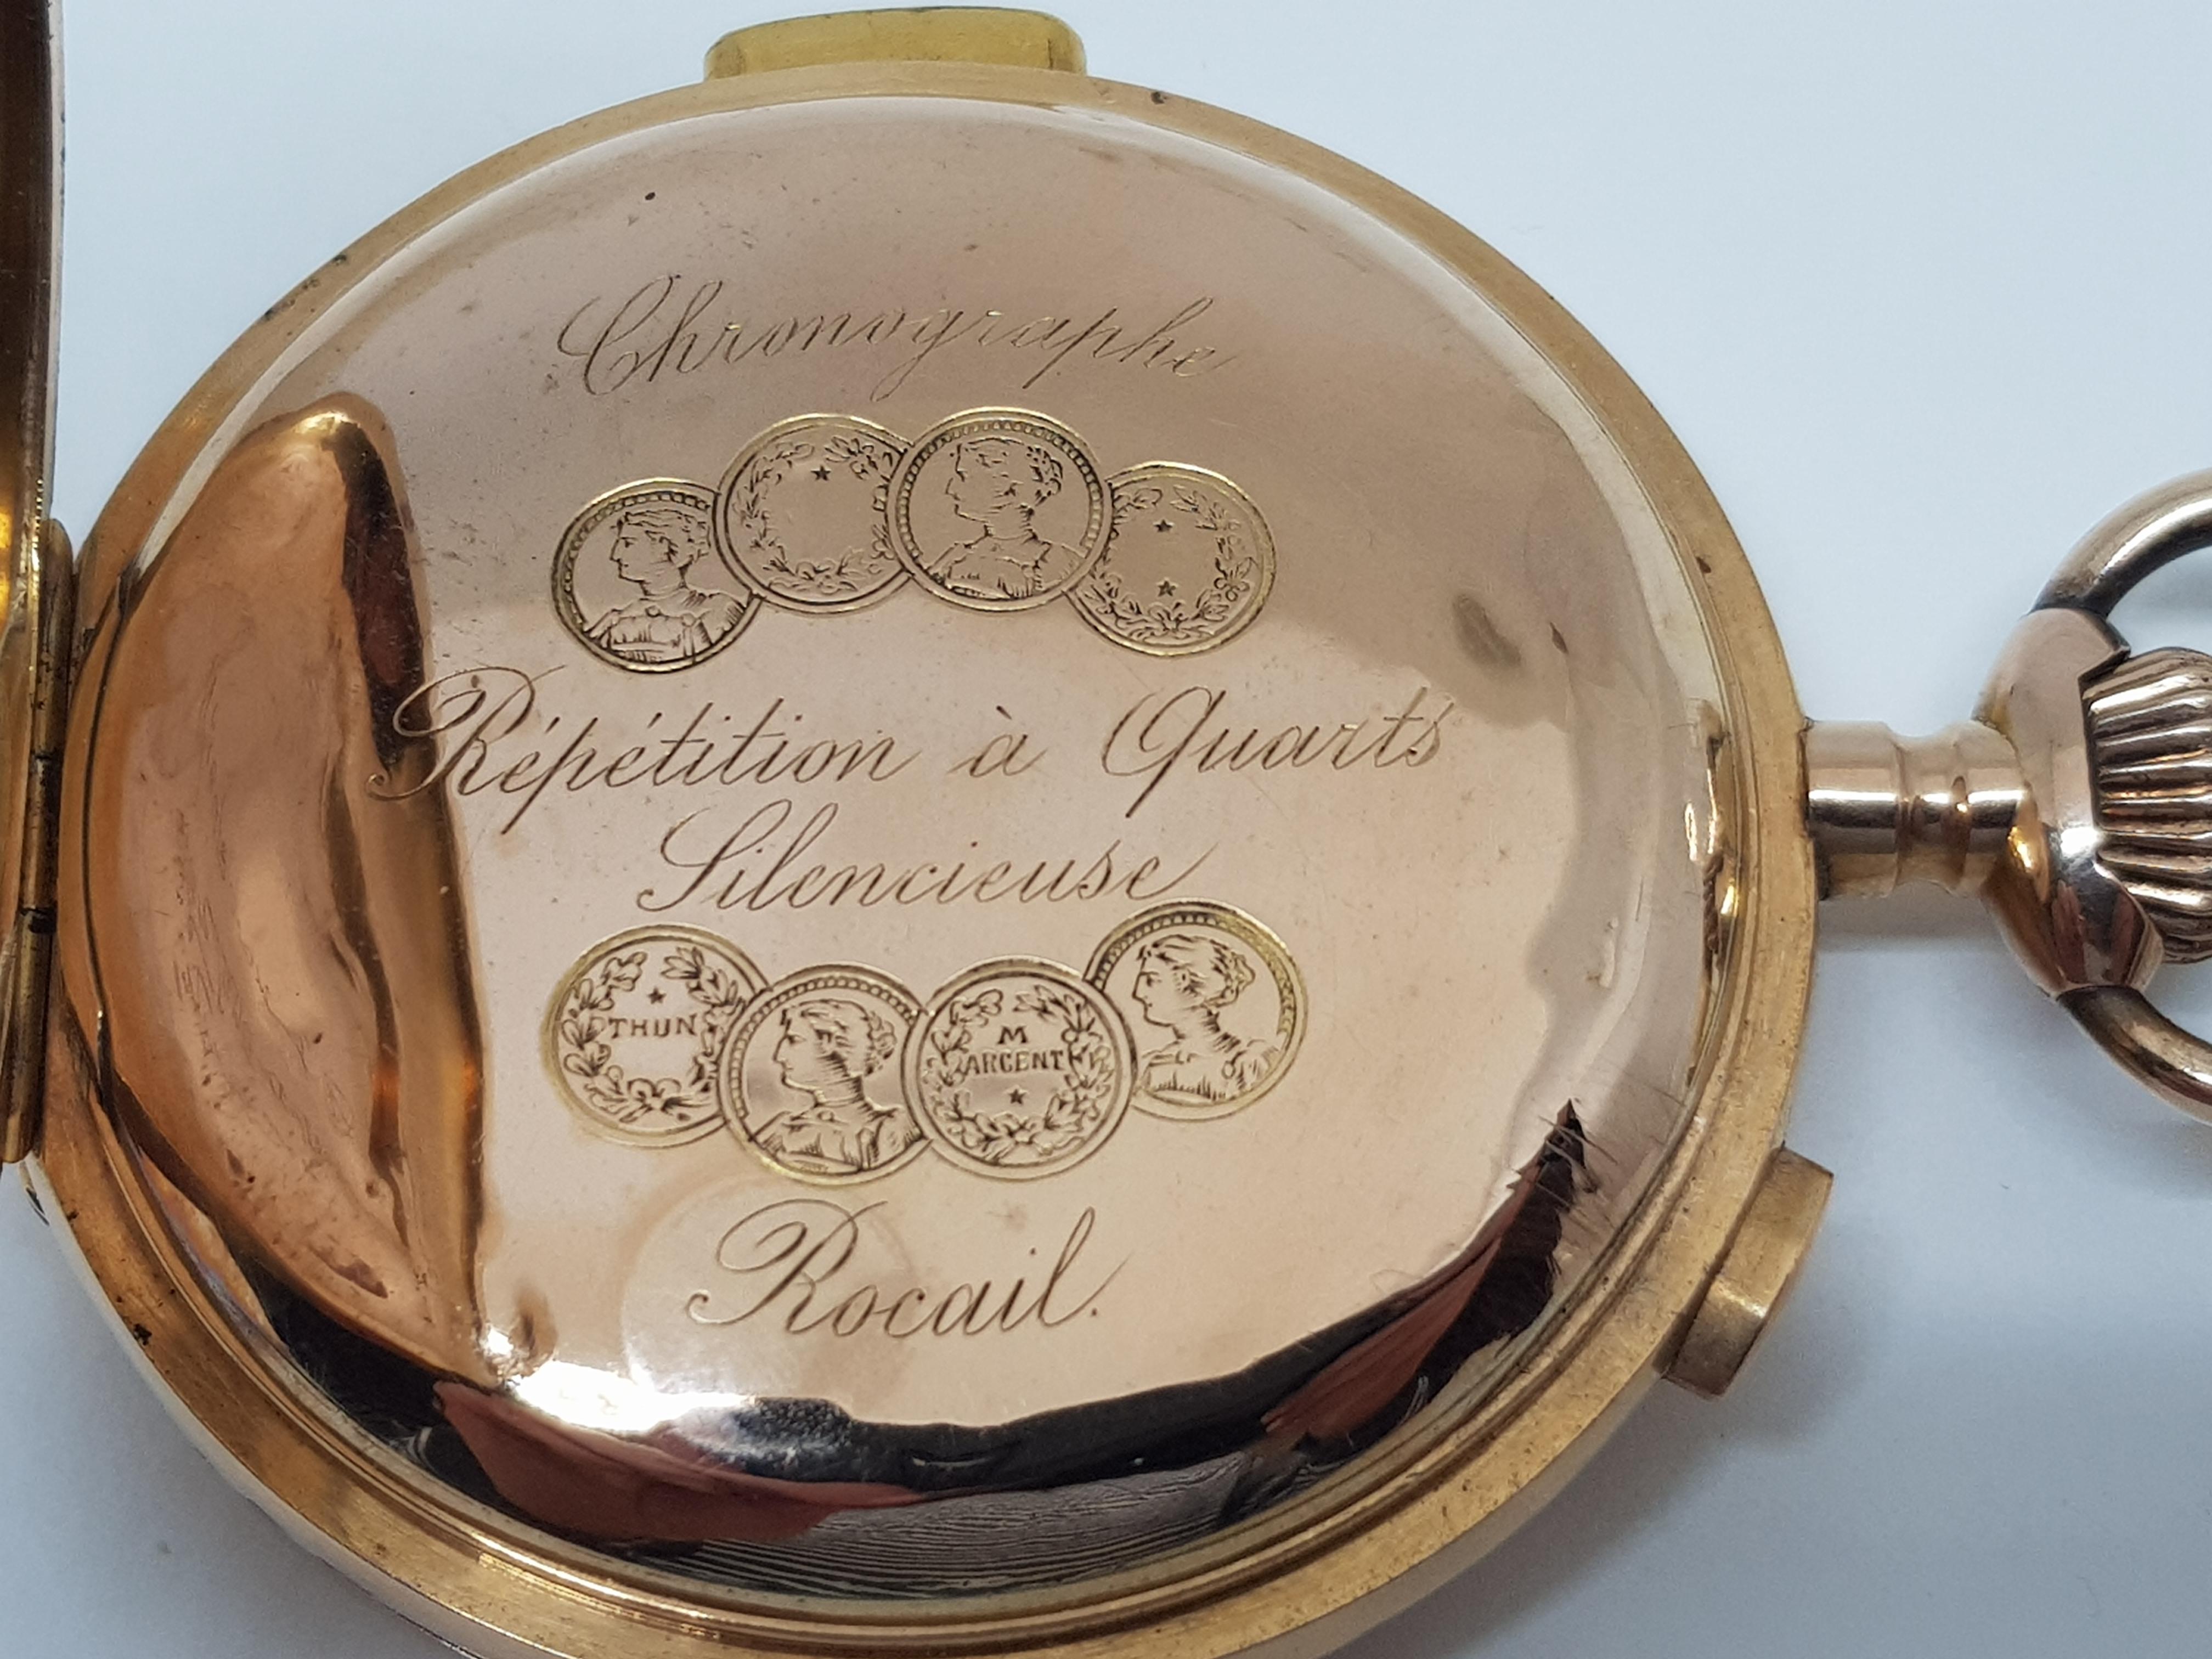 Chronographe Repetition a Quartz Silencieus Rocail Musical Gold Pocket Watch 1